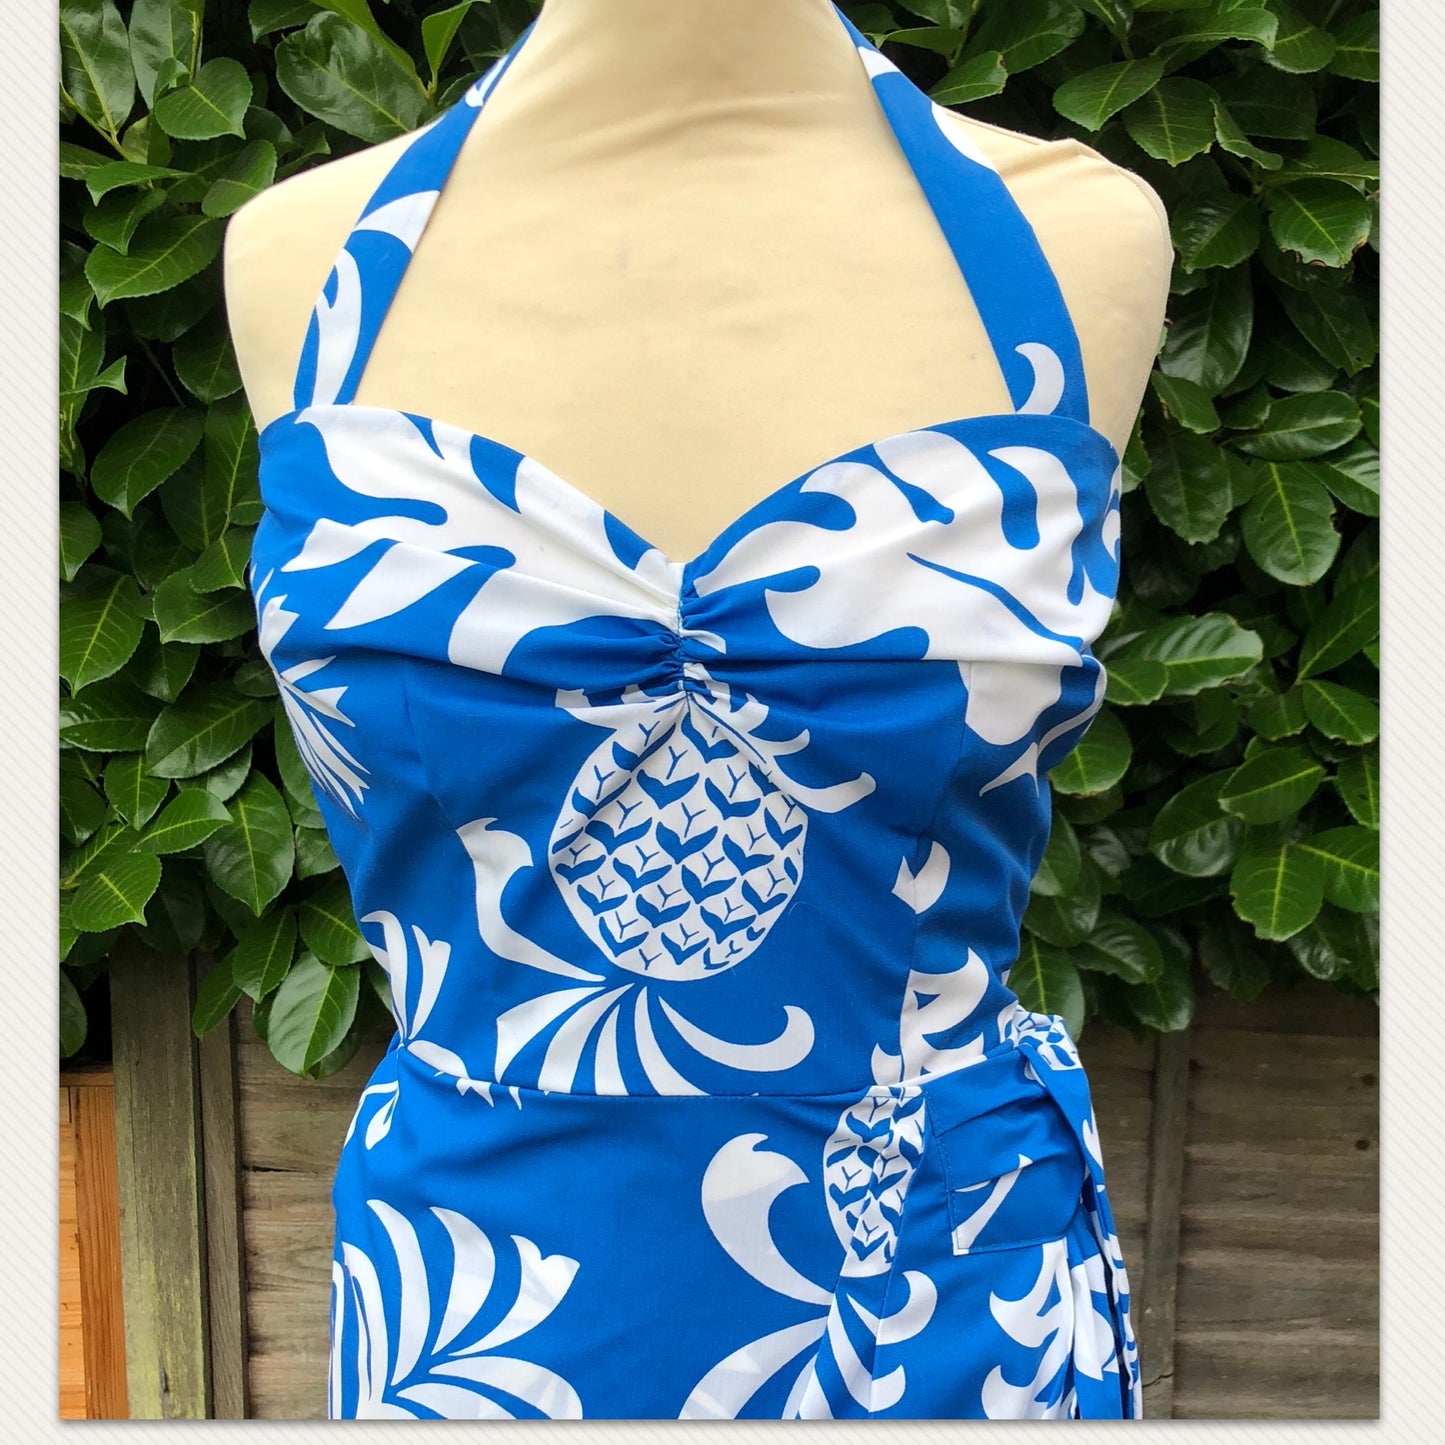 Hawaiian - 1950s vintage inspired blue and white tropical print wrap around sarong dress